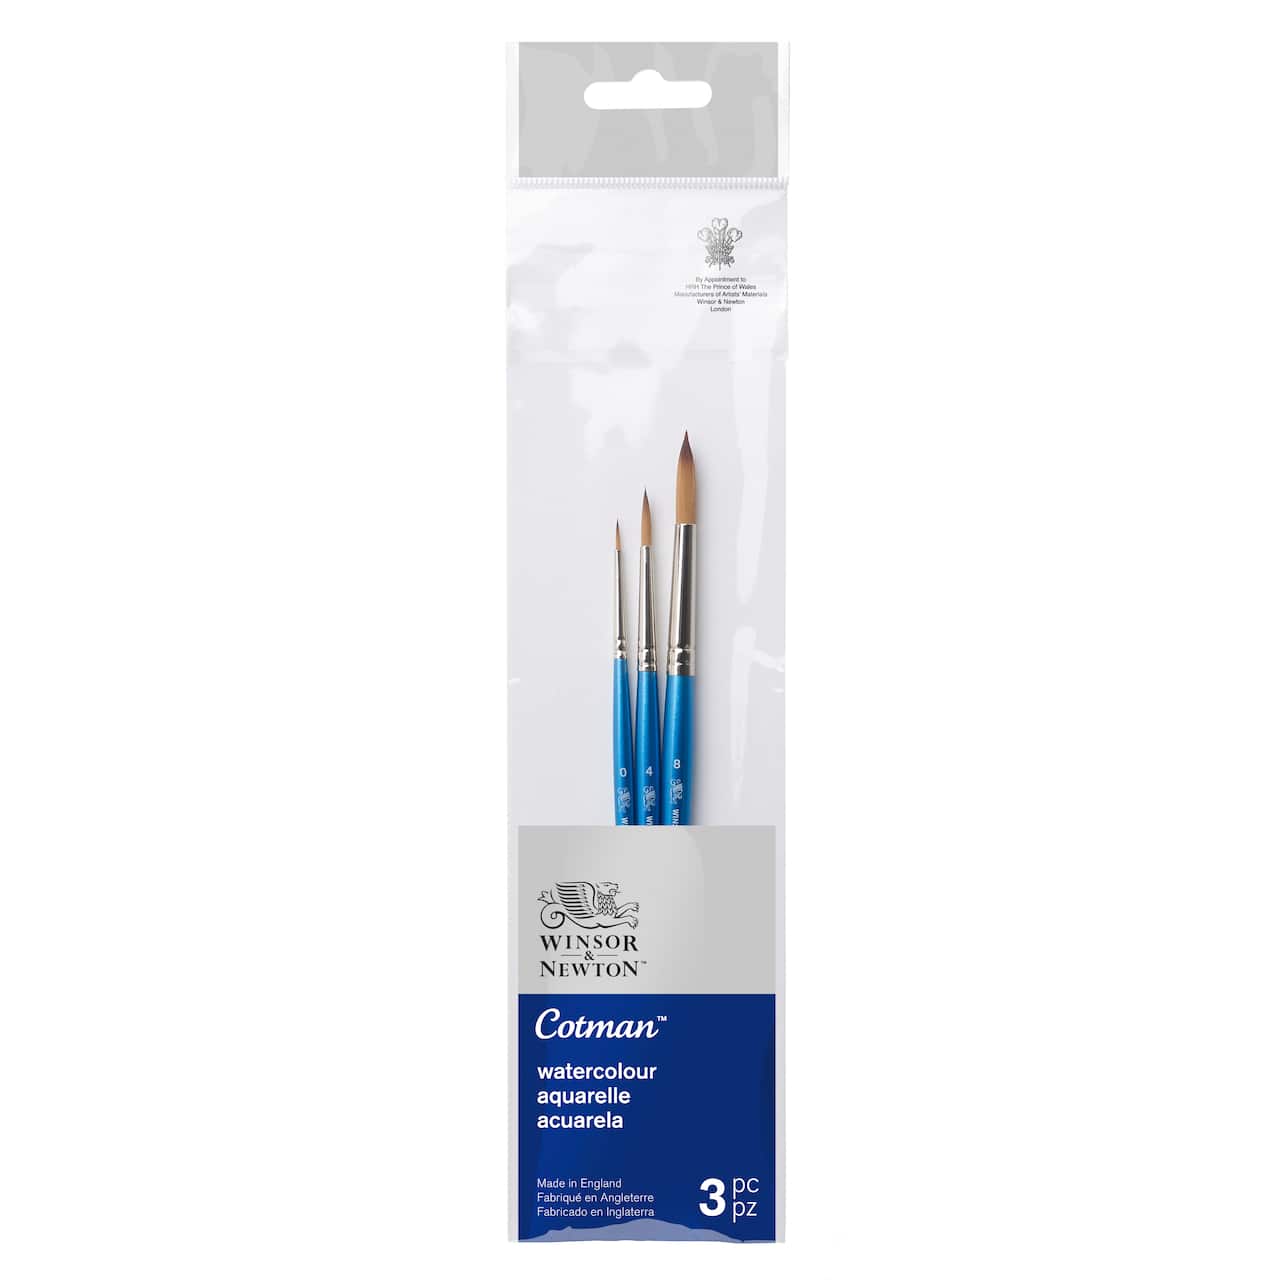 Winsor & Newton™ Cotman™ Watercolor 3 Piece Brush Set